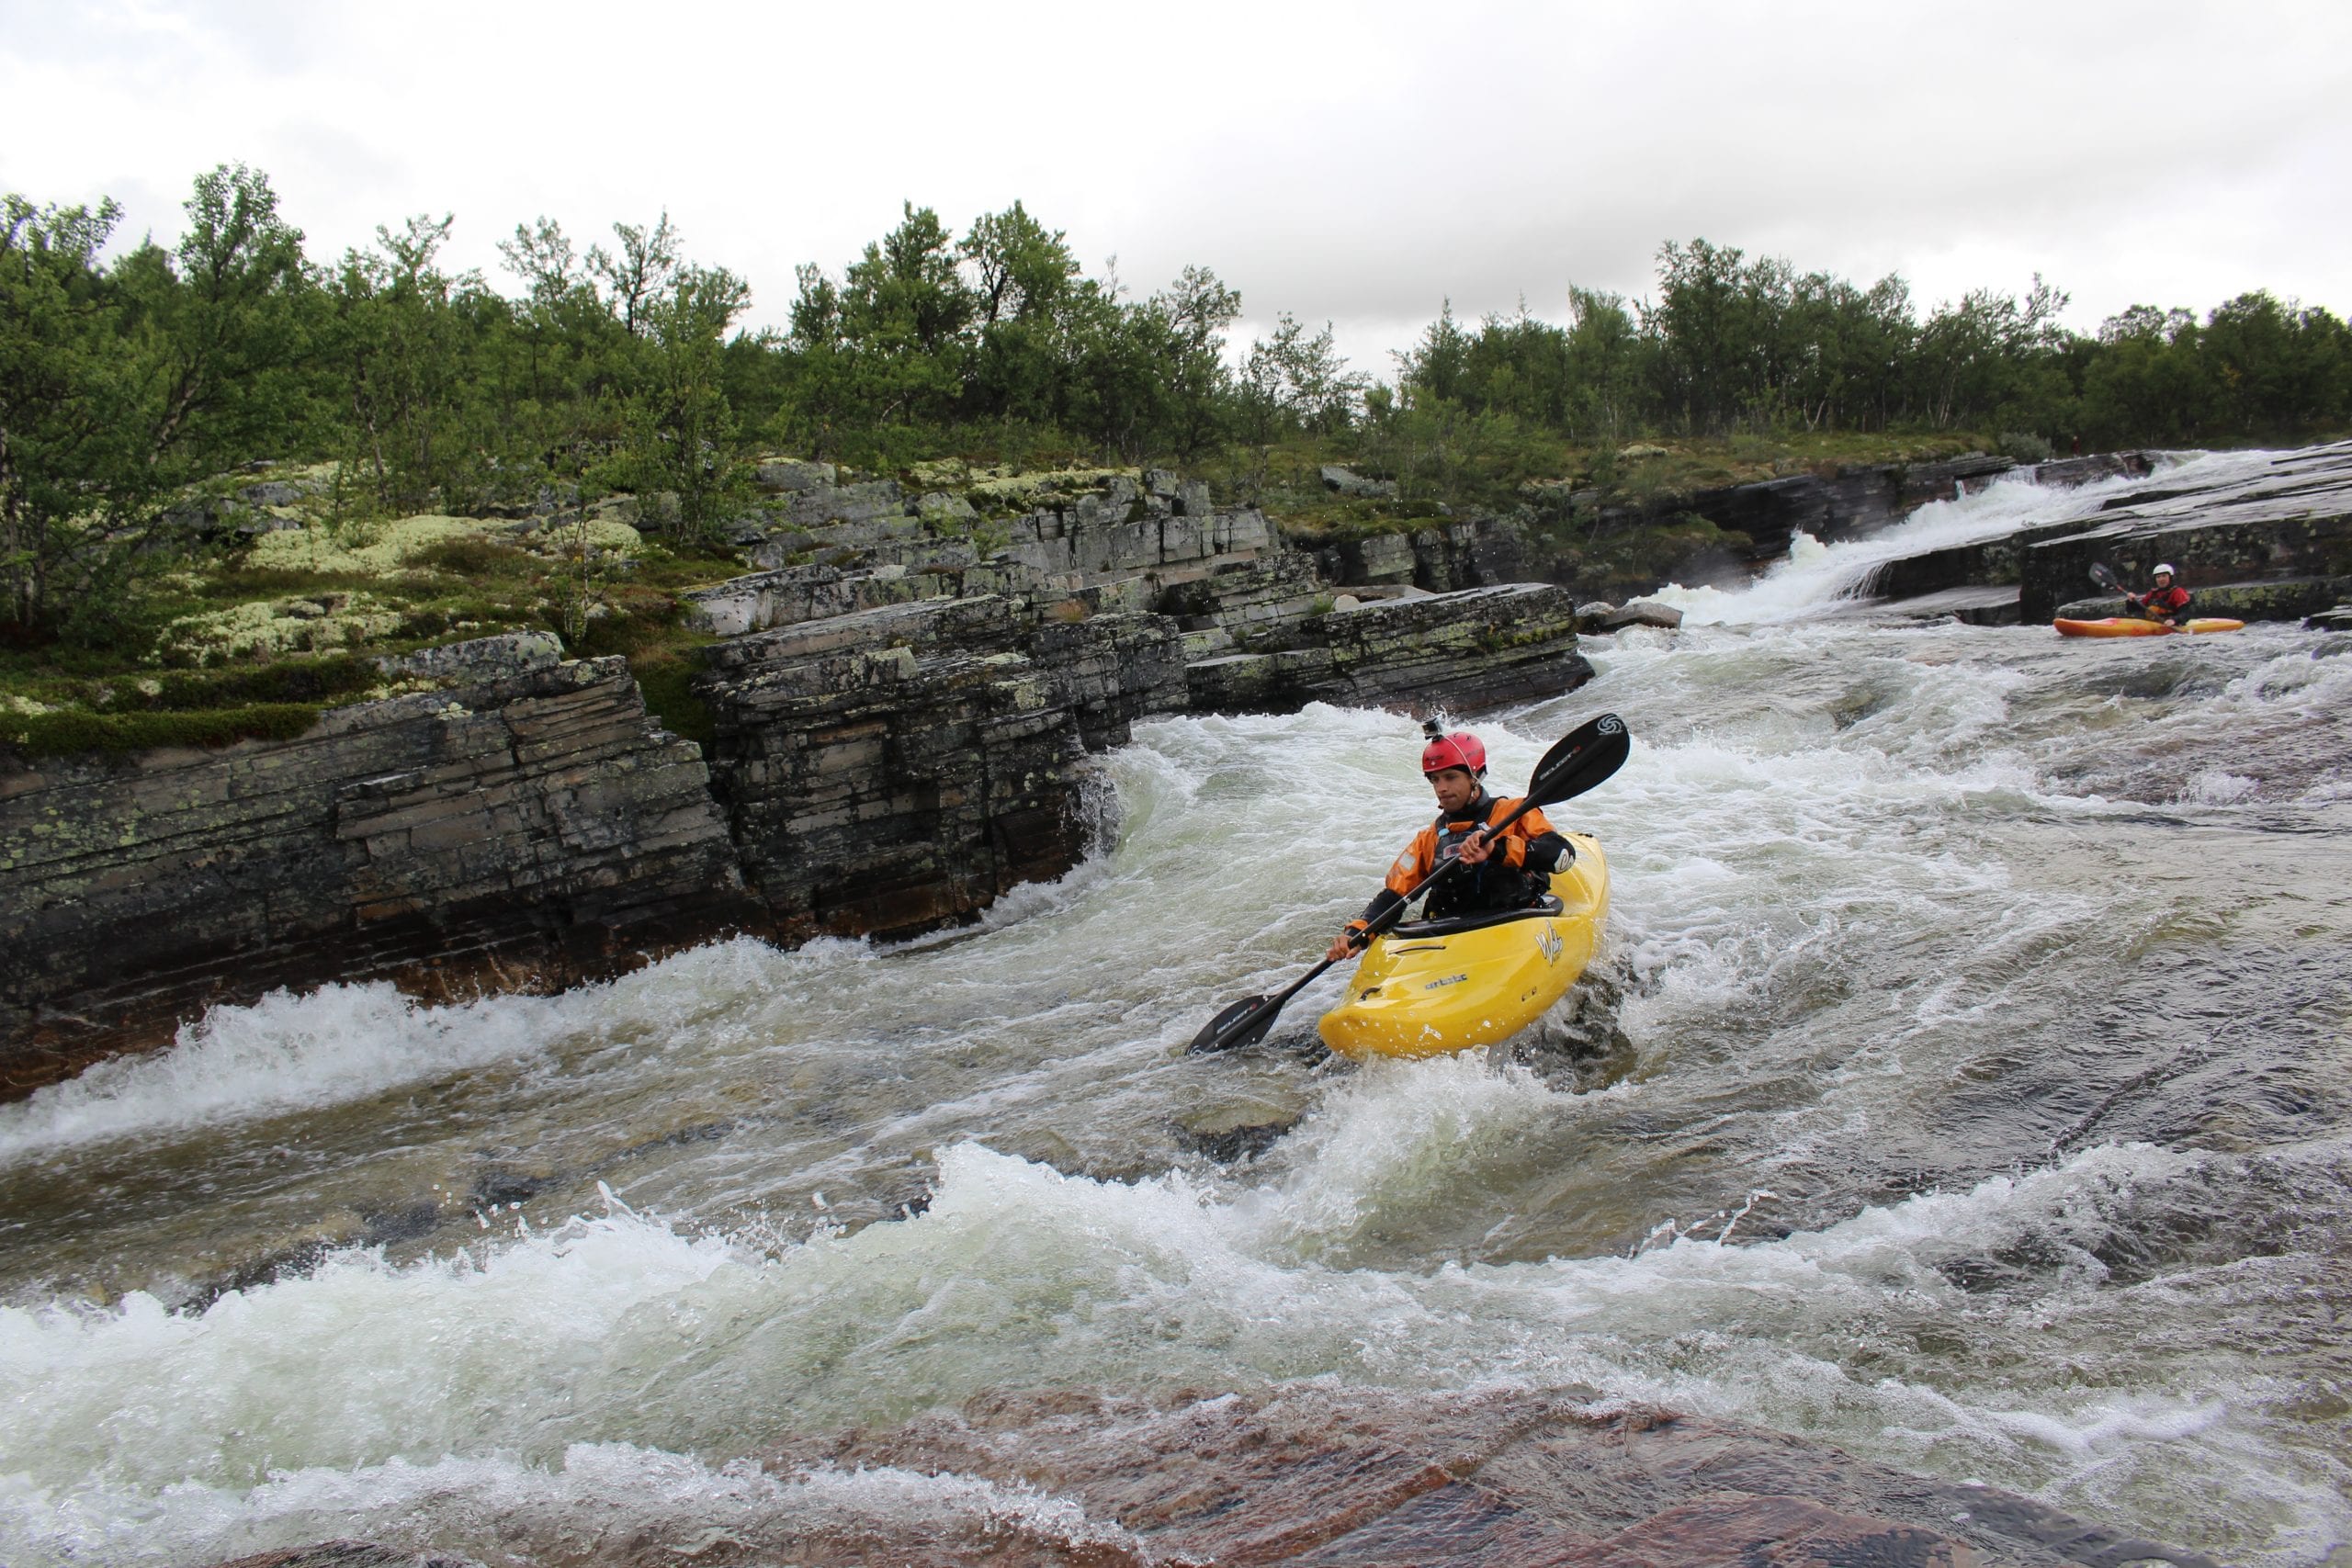 Kayaking on Ula River - main slide section